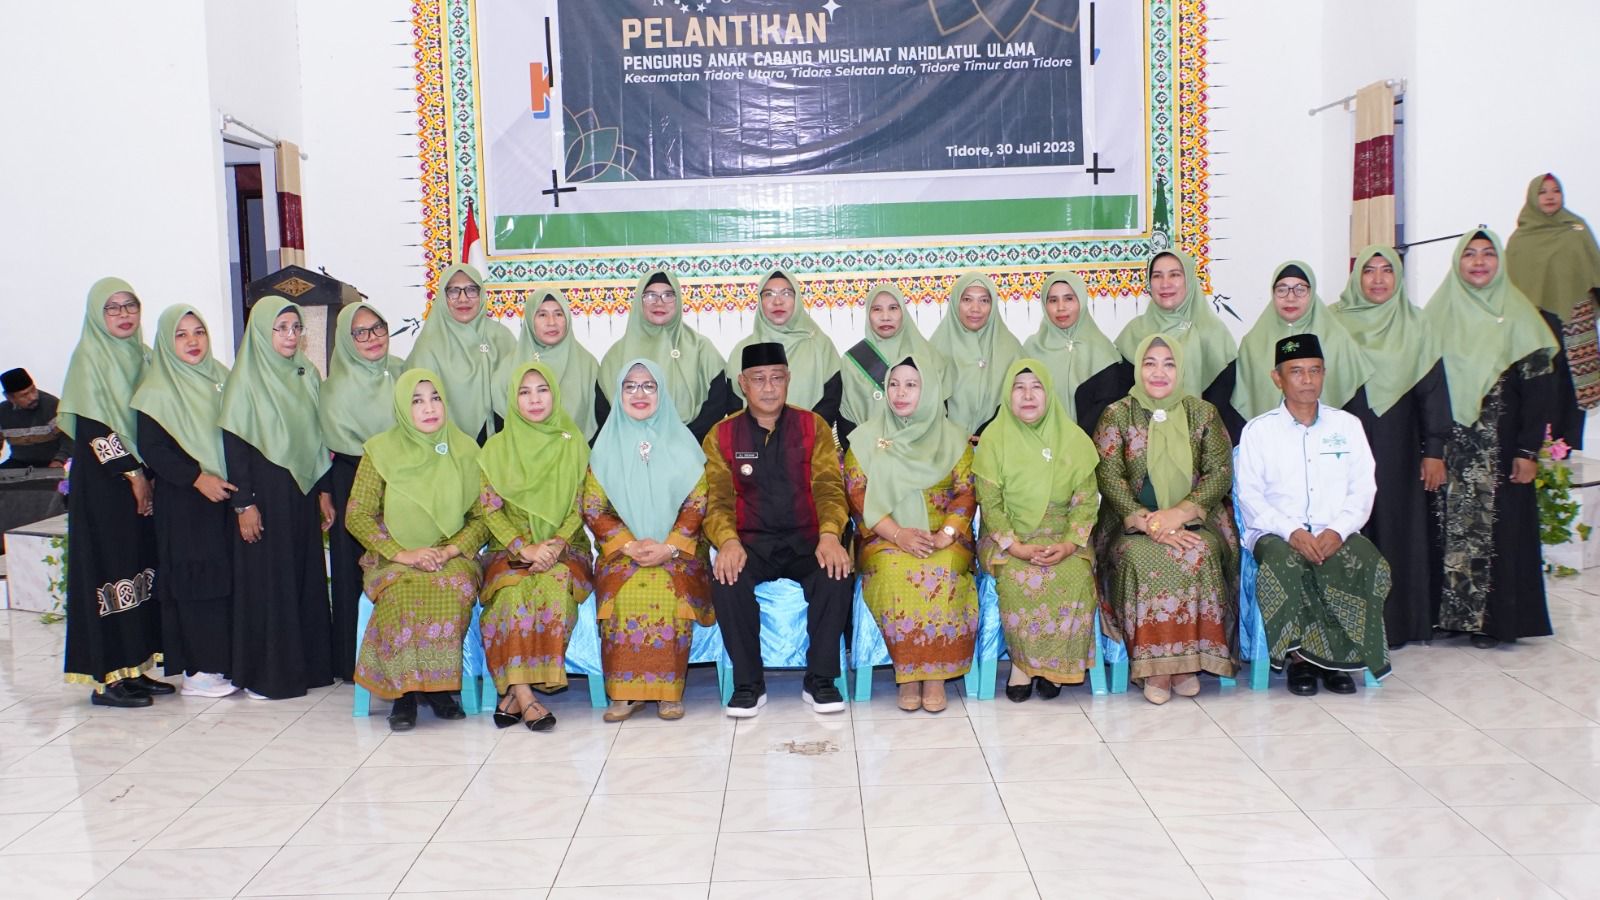 Walikota Tidore Kepulauan Capt. Ali Ibrahim Hadiri Pelantikan PAC Muslimat NU Tidore